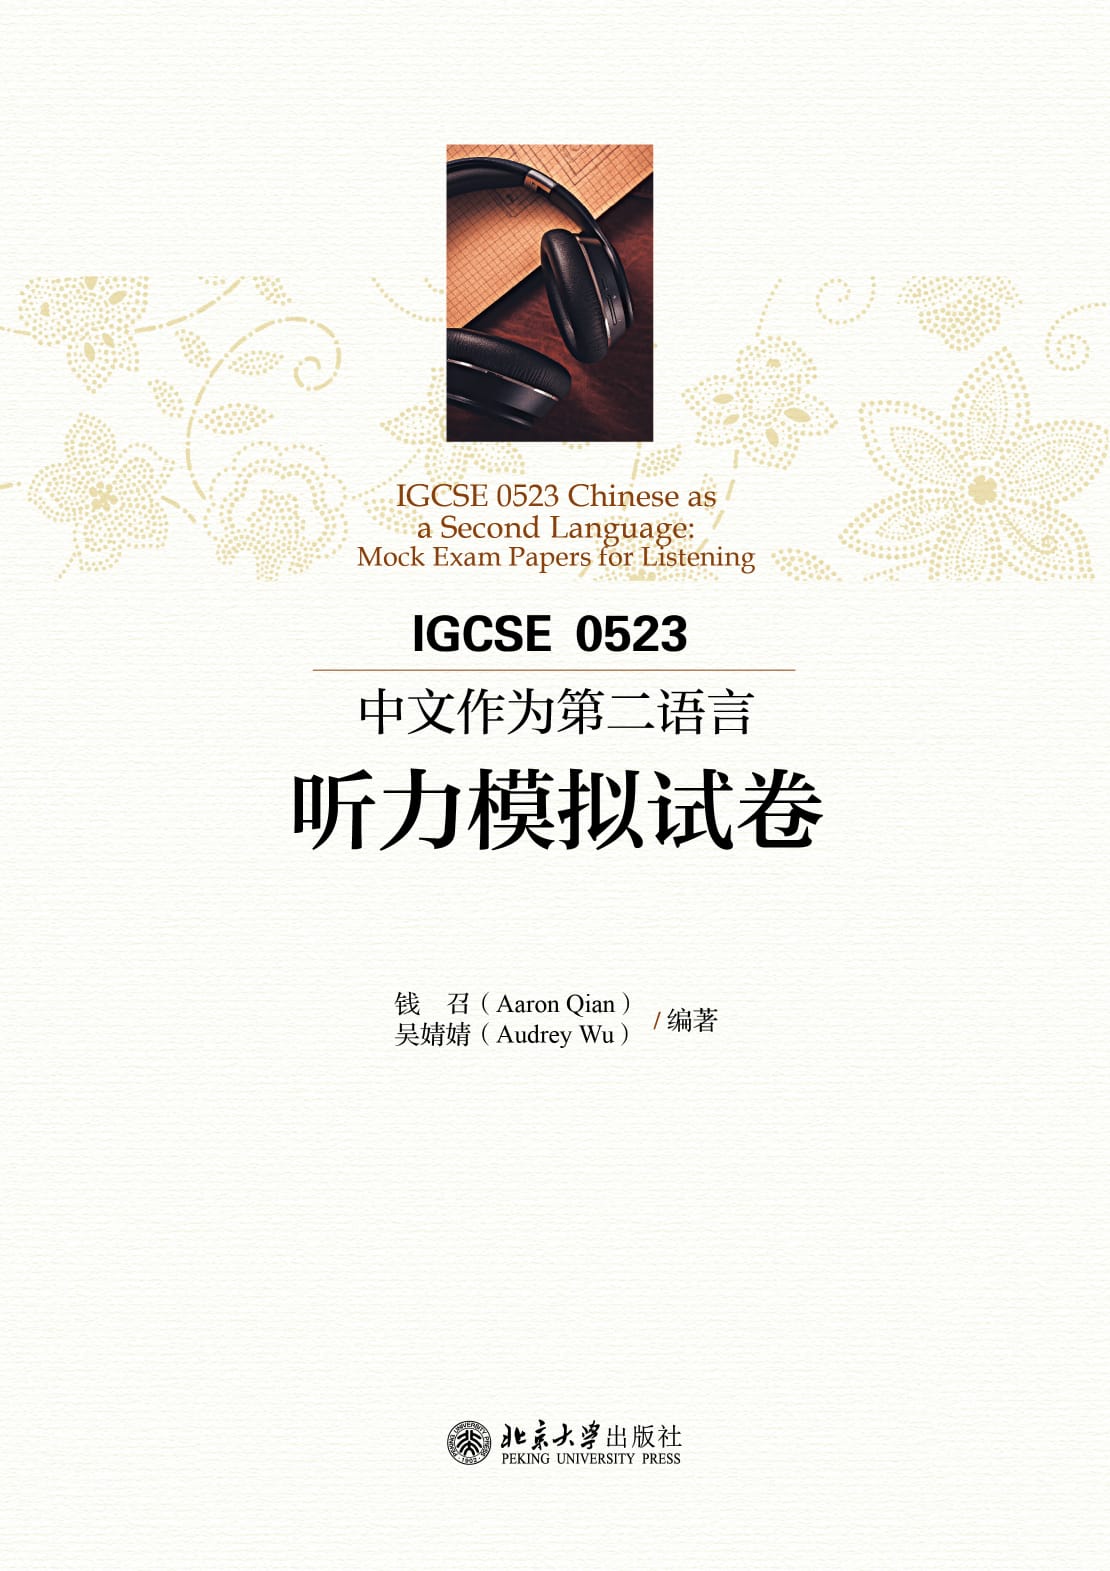 IGCSE 0523中文作为第二语言听力模拟试卷  IGCSE 0523 Chinese As A Second Language Mock Paper Exam for Listening